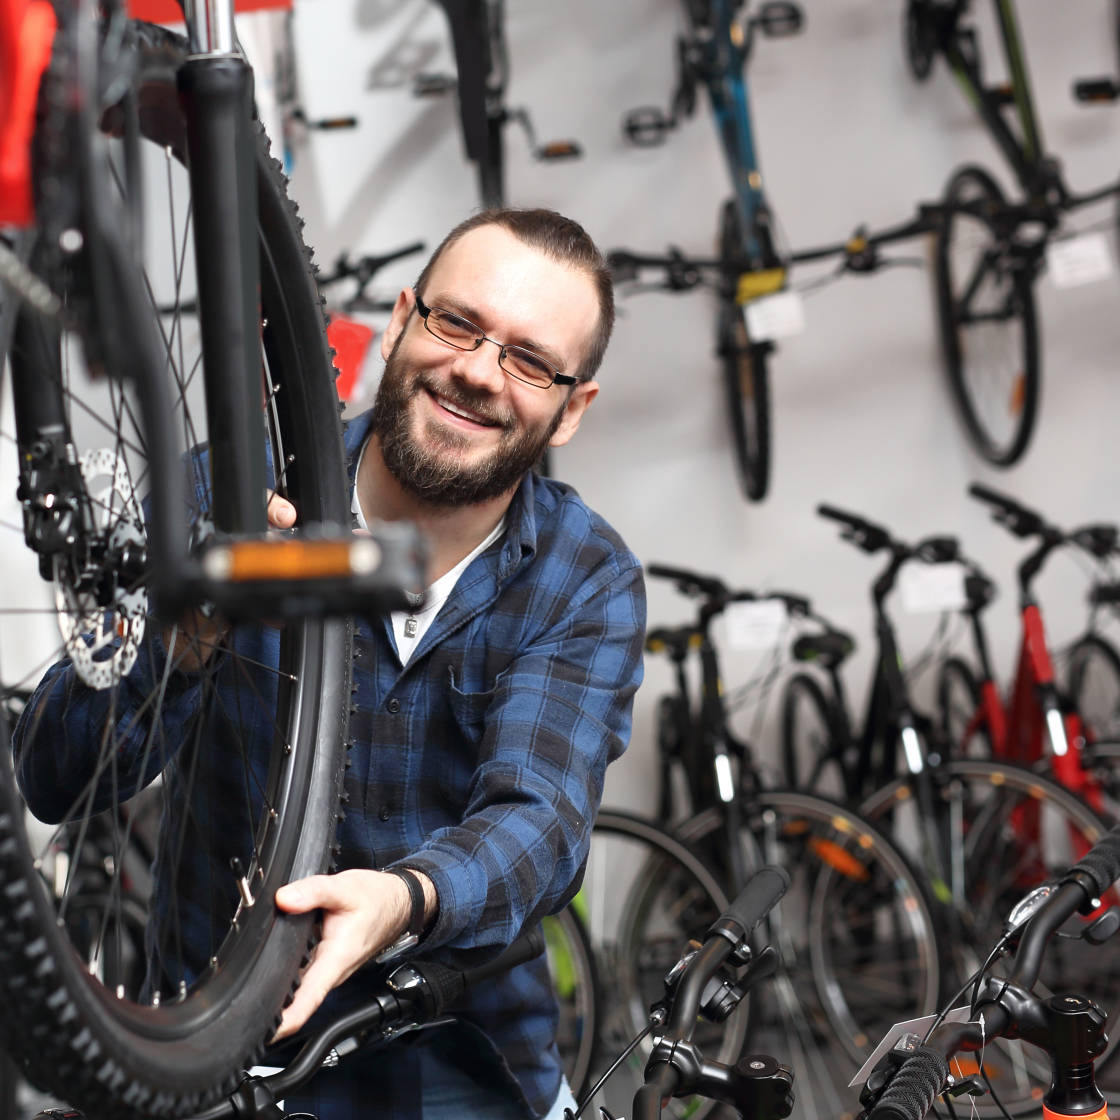 Bloke in a bike shop, surrounded by bikes